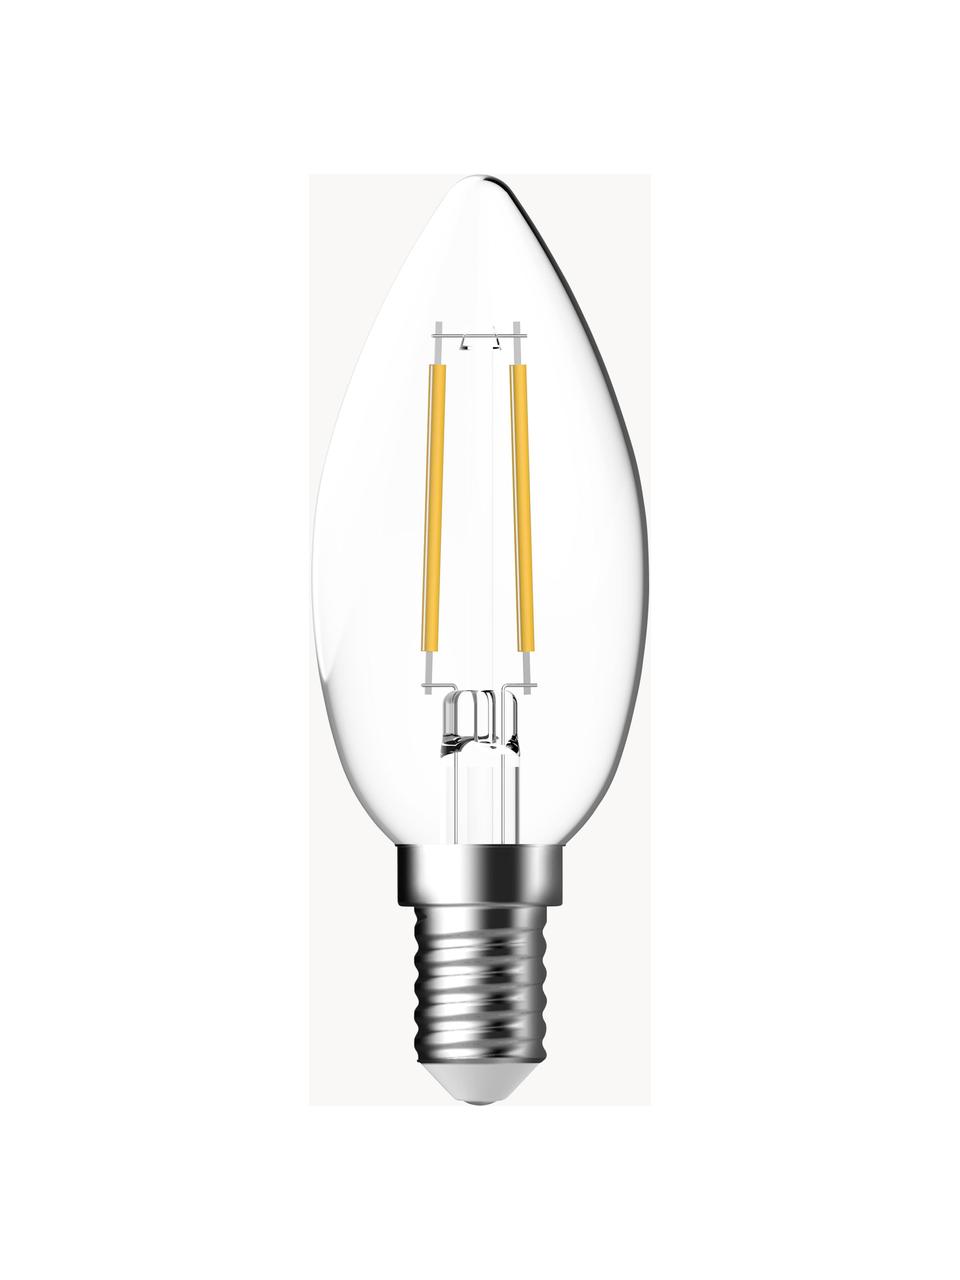 Žárovka E14, teplá bílá, 2 ks, Transparentní, Ø 4 cm, 250 lm